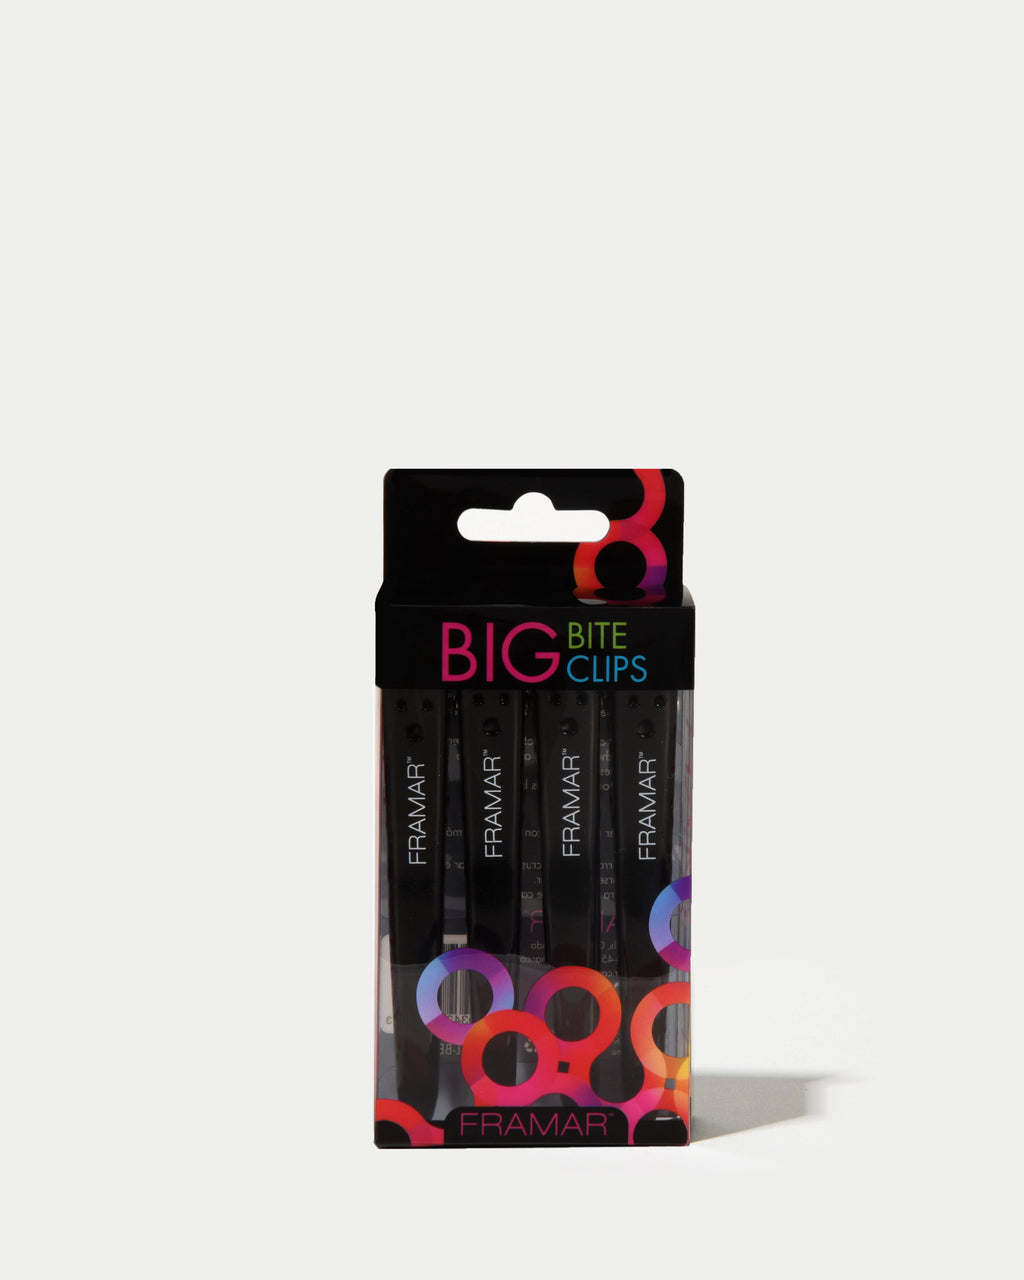 Framar Black Big Bite Clips - Set of 4 Professional Hair Clips - Hair Clips for